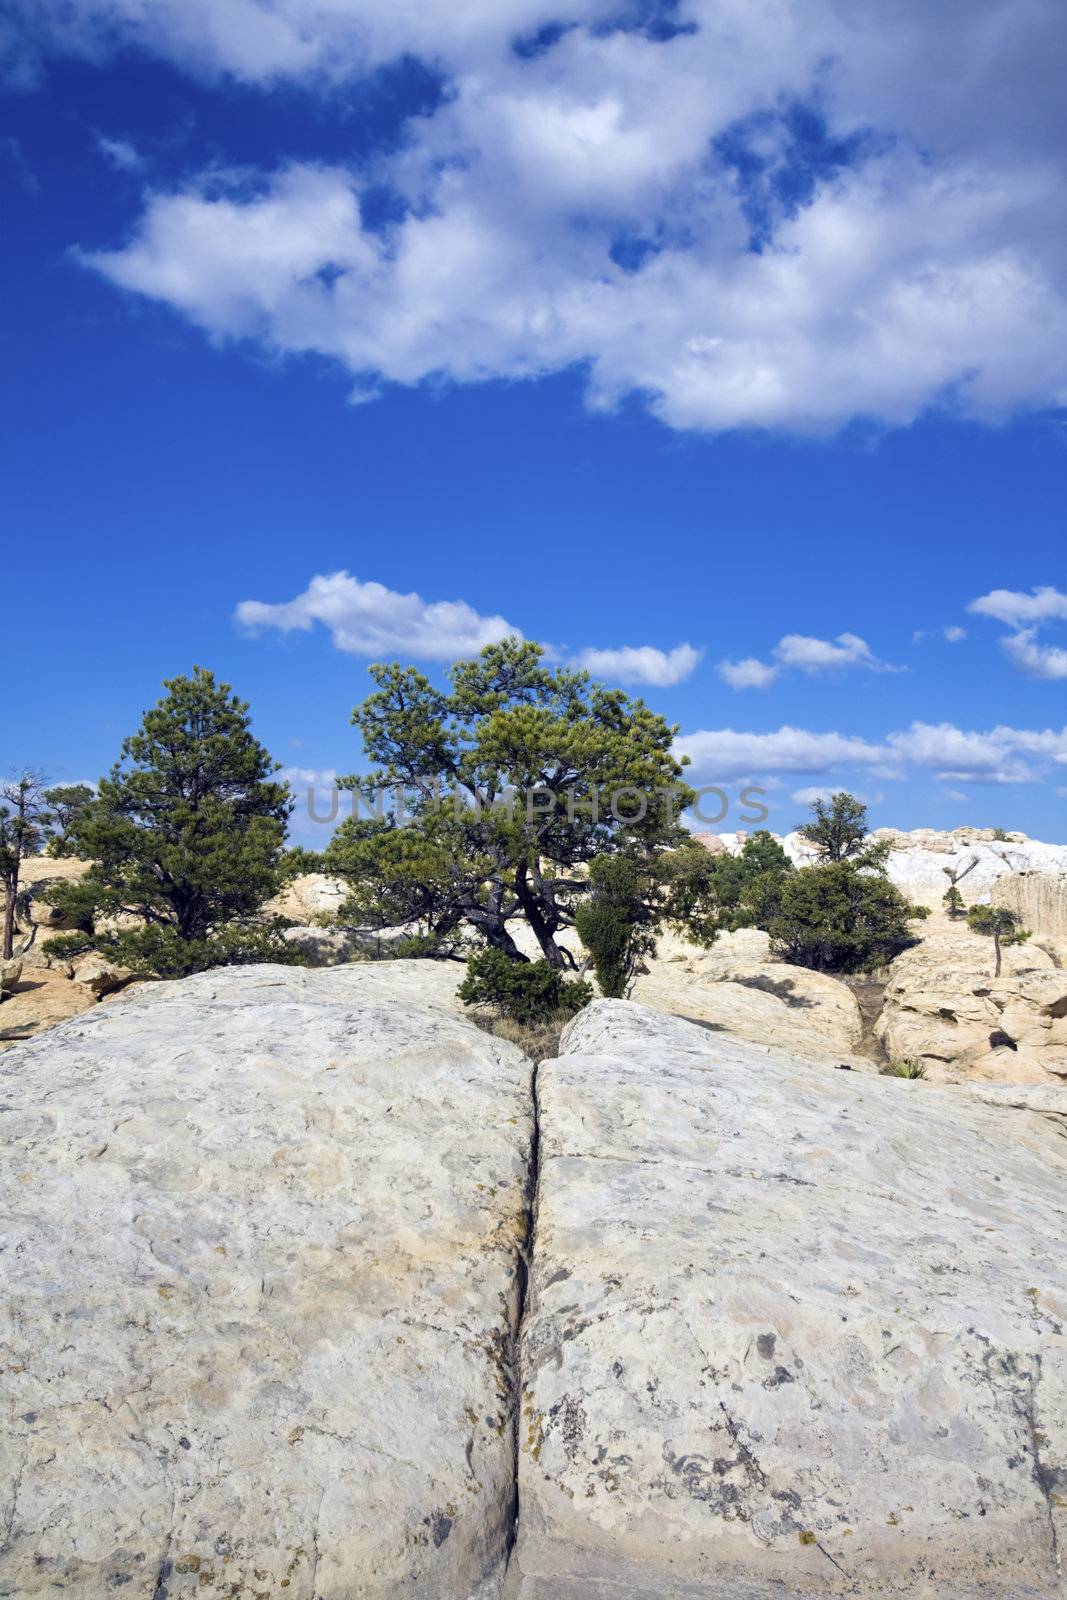 Cheecks Rock in El Morro National Monument, New Mexico.